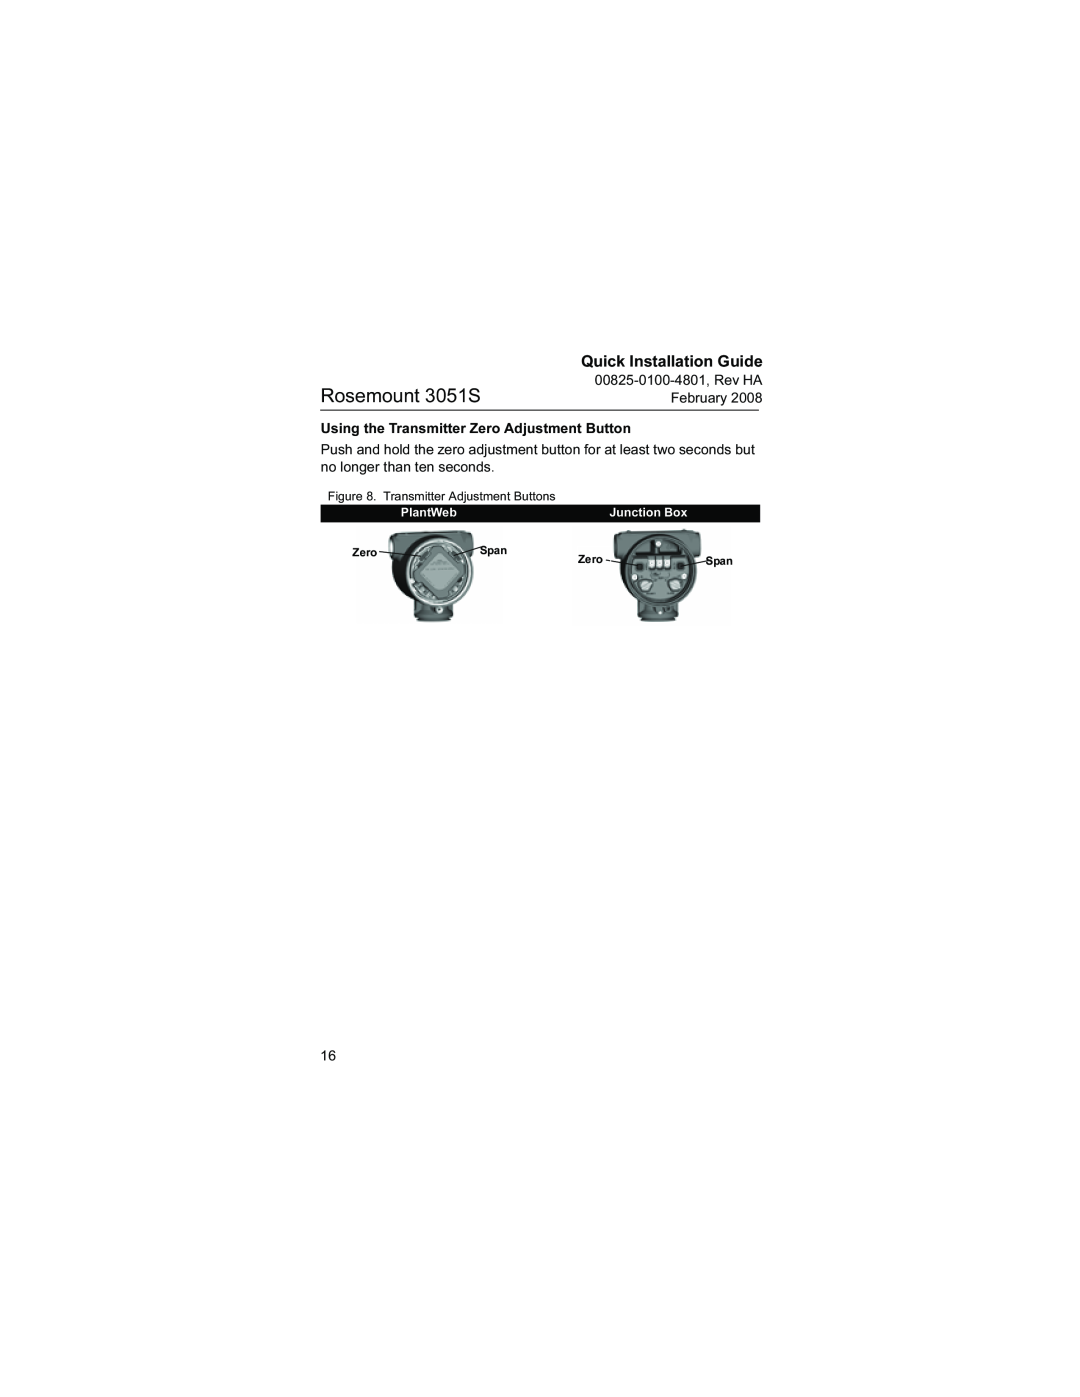 Emerson manual Rosemount 3051S, Quick Installation Guide, 00825-0100-4801, Rev HA February, PlantWeb, Junction Box 